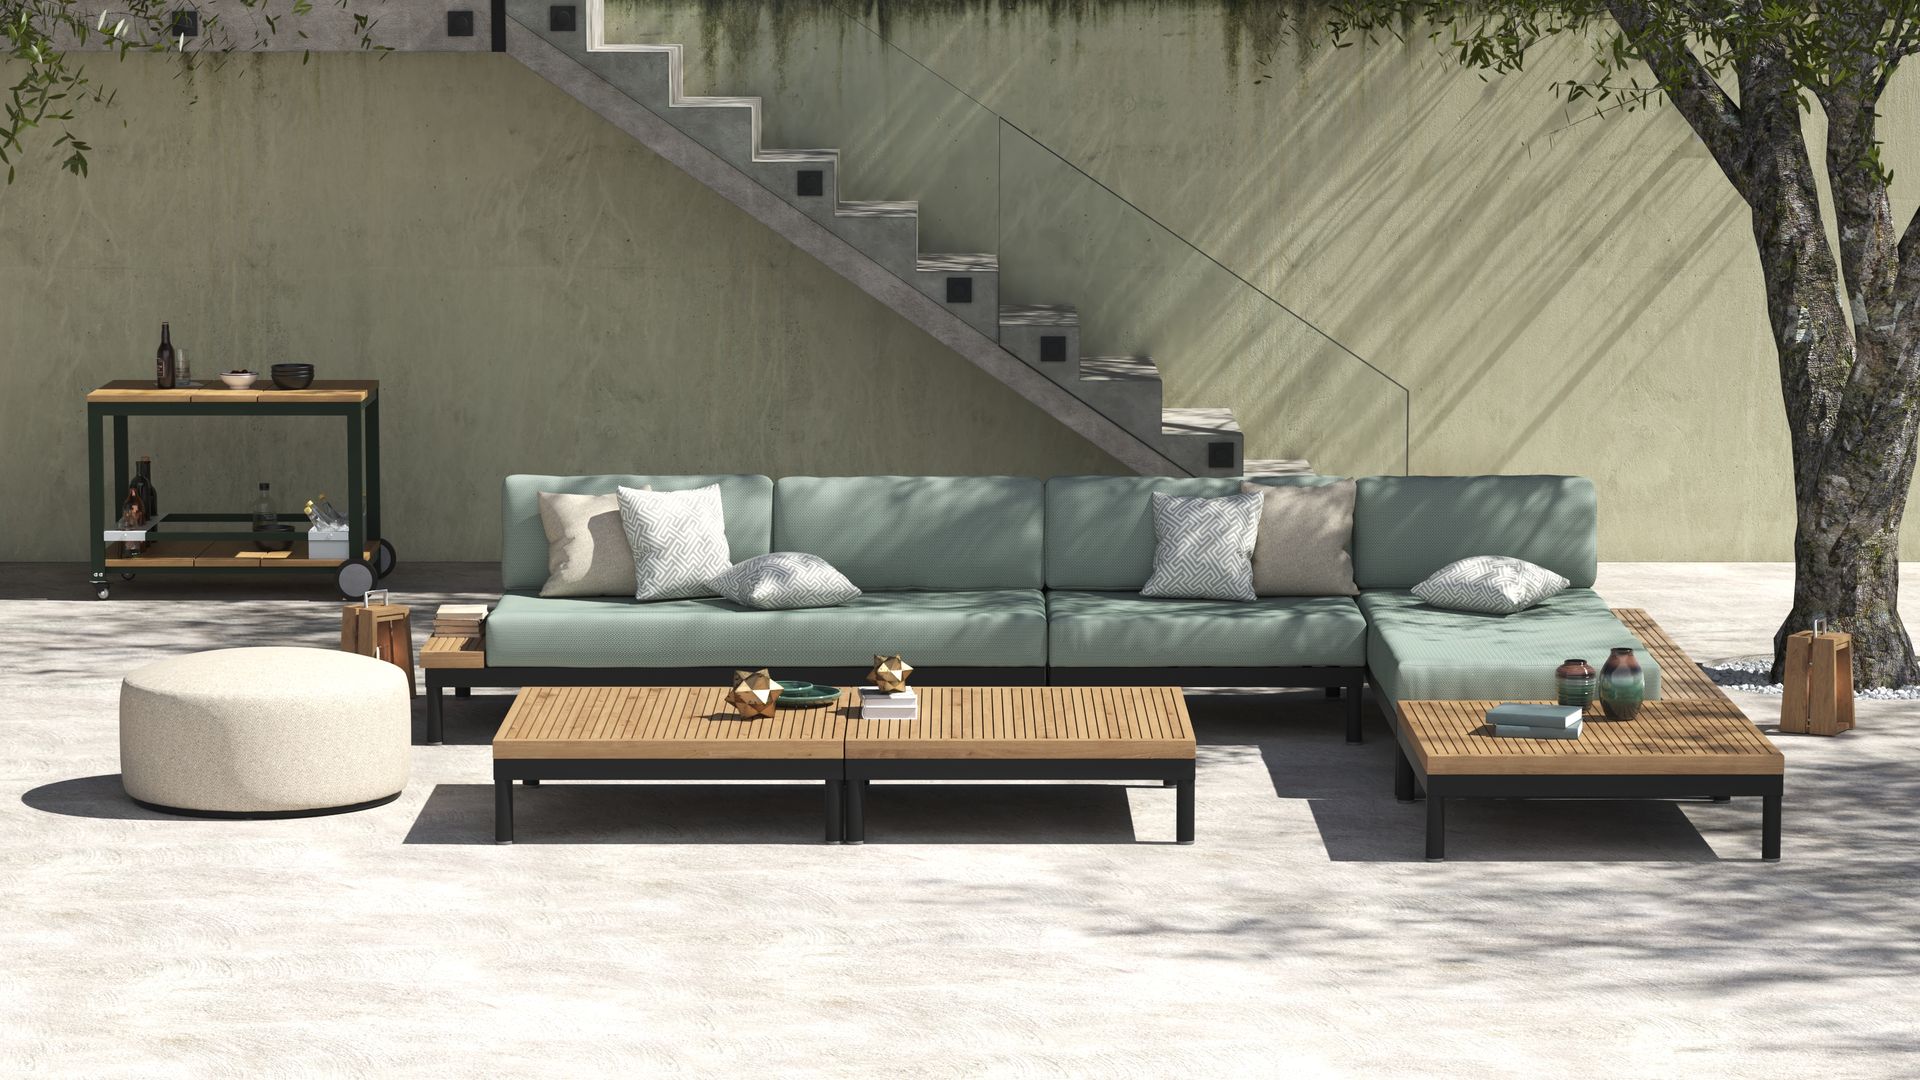 Lightweight Aluminium And Teak Wood Modular Outdoor Sofa With Durable Outdoor Fabric